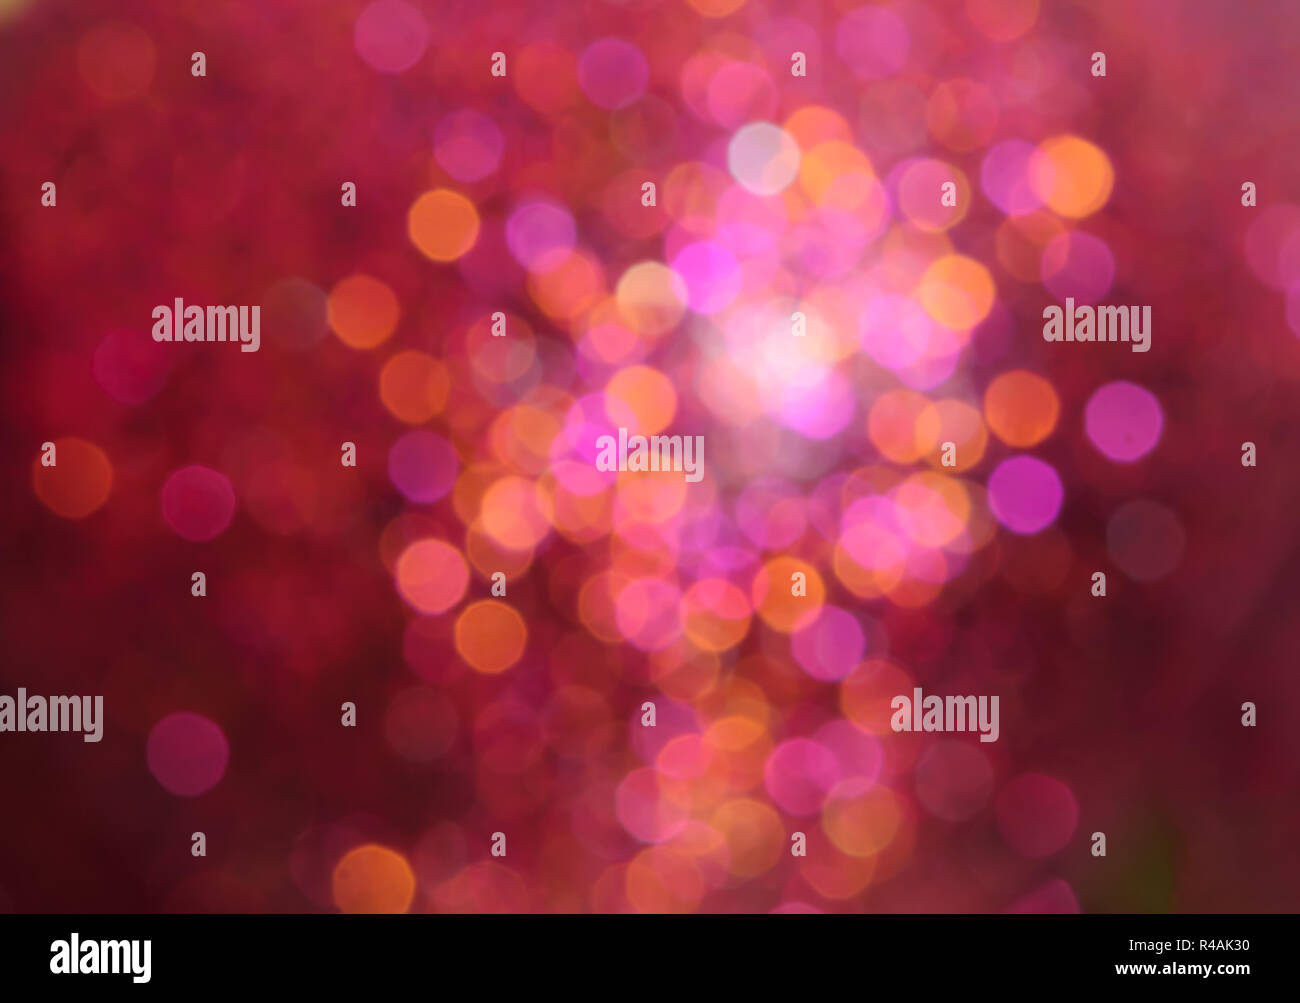 Defokussierten abstrakt bunt Bokeh christmas lights Hintergrund. Stockfoto